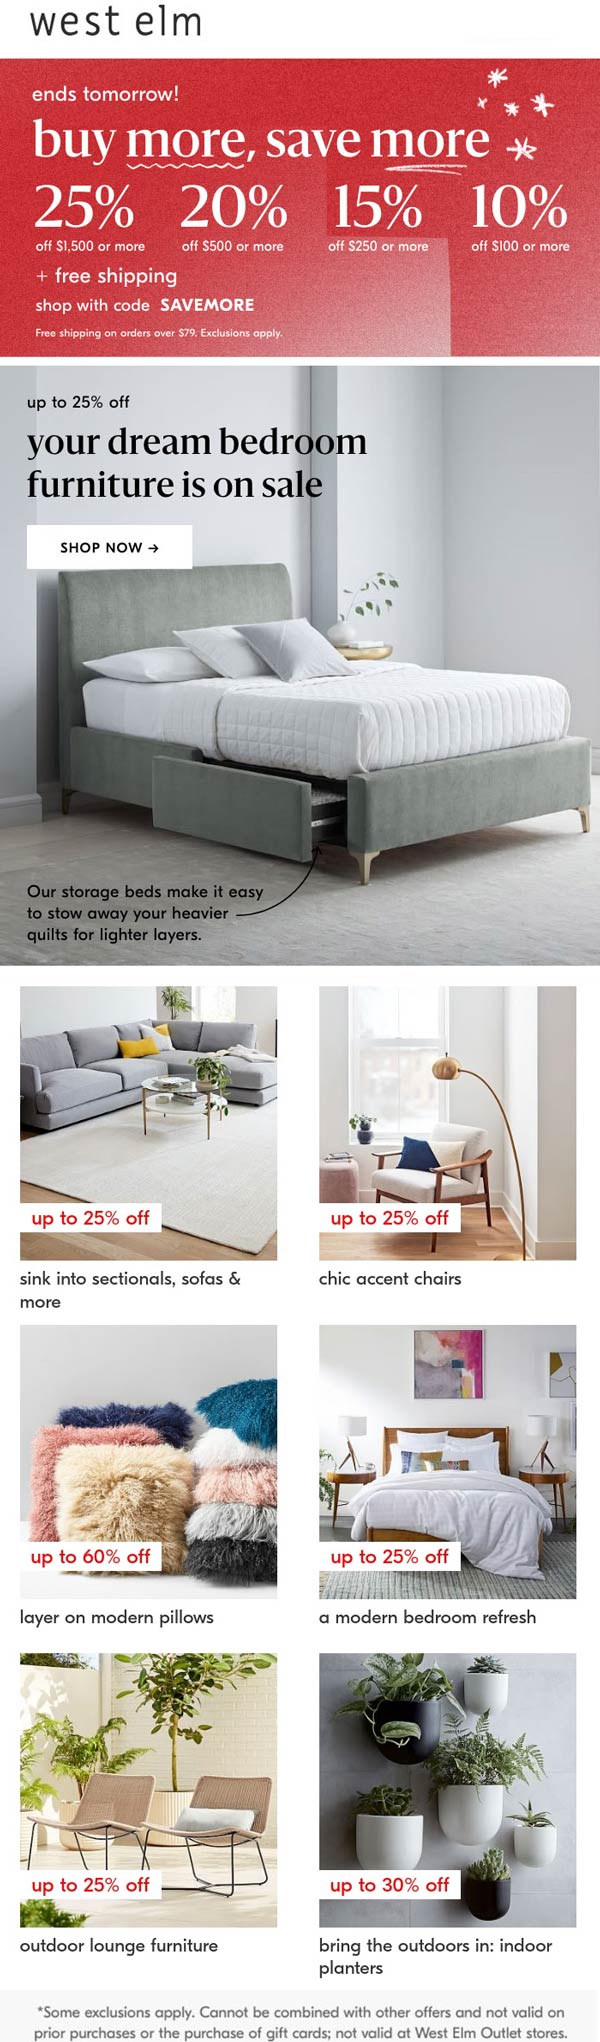 West Elm stores Coupon  10-25% off furniture at West Elm via promo code SAVEMORE #westelm